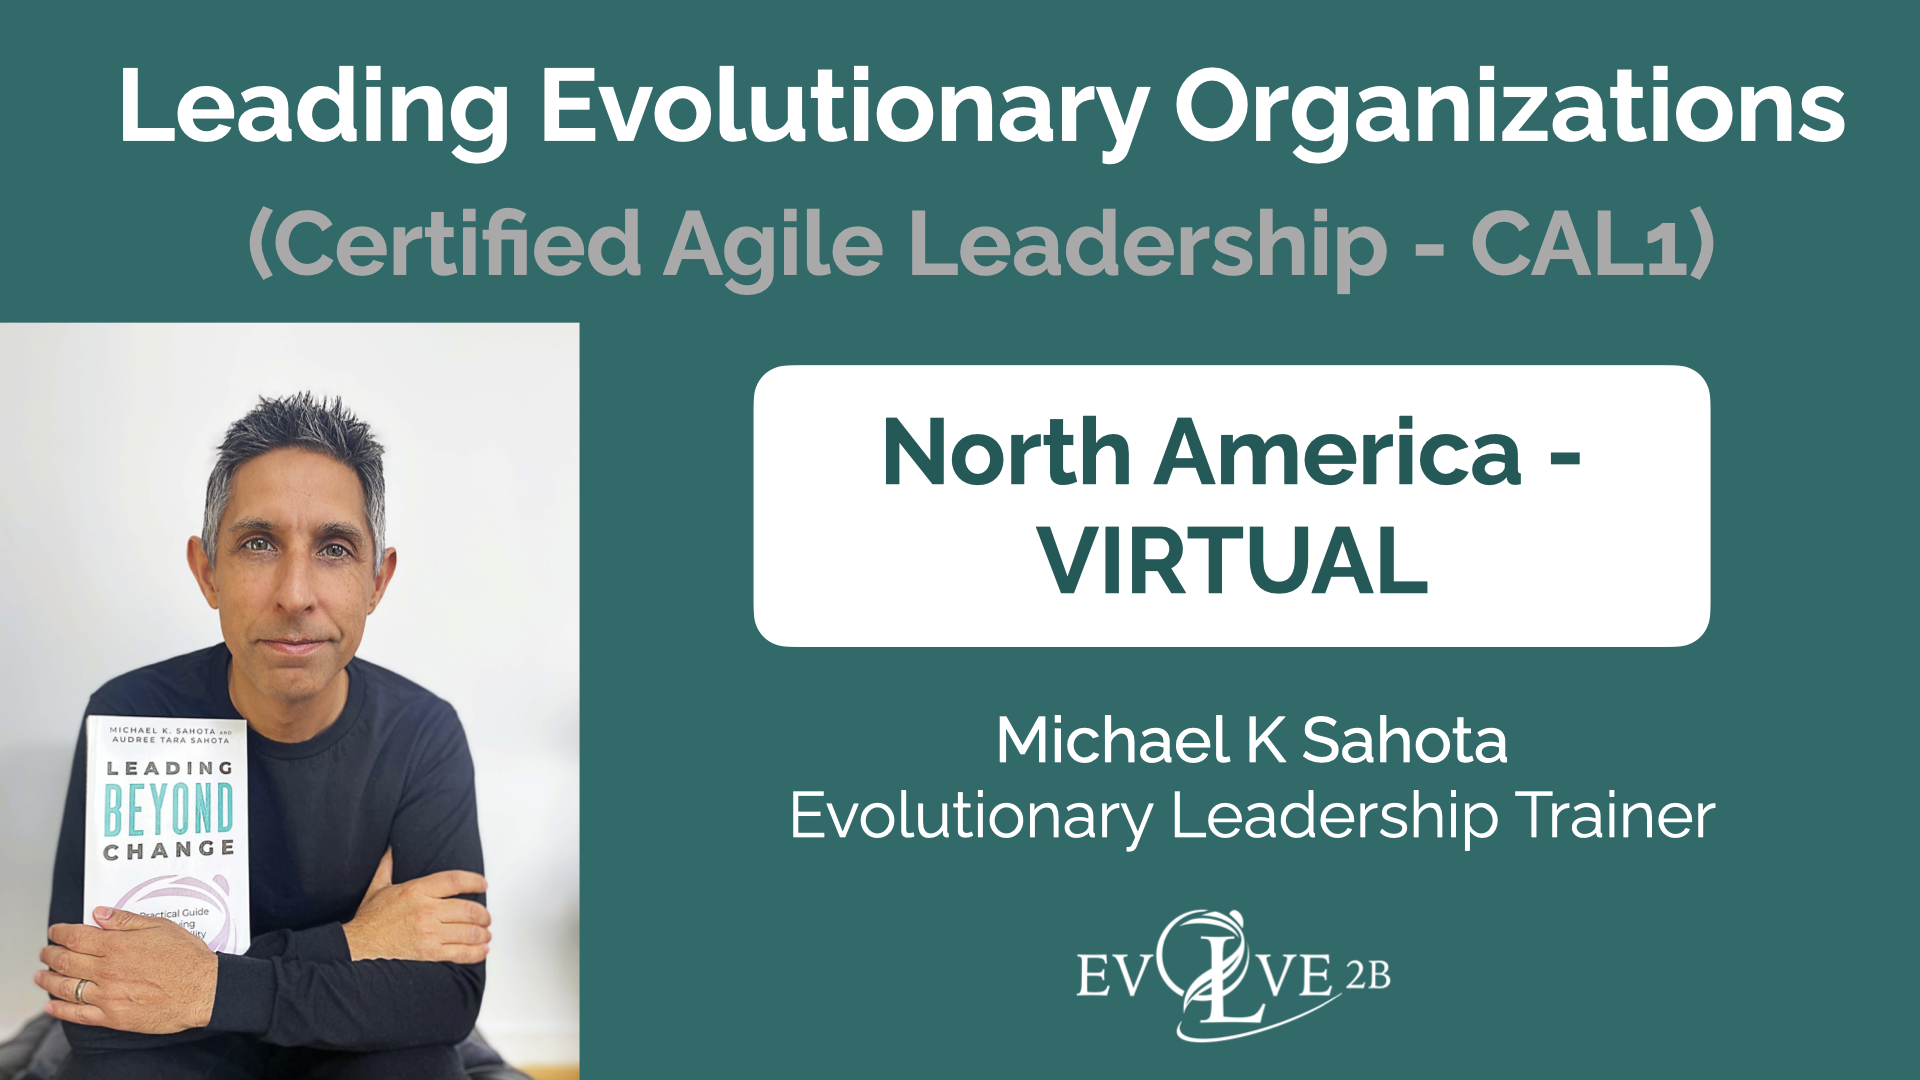 Leading Evolutionary Organizations - Virtual - North America